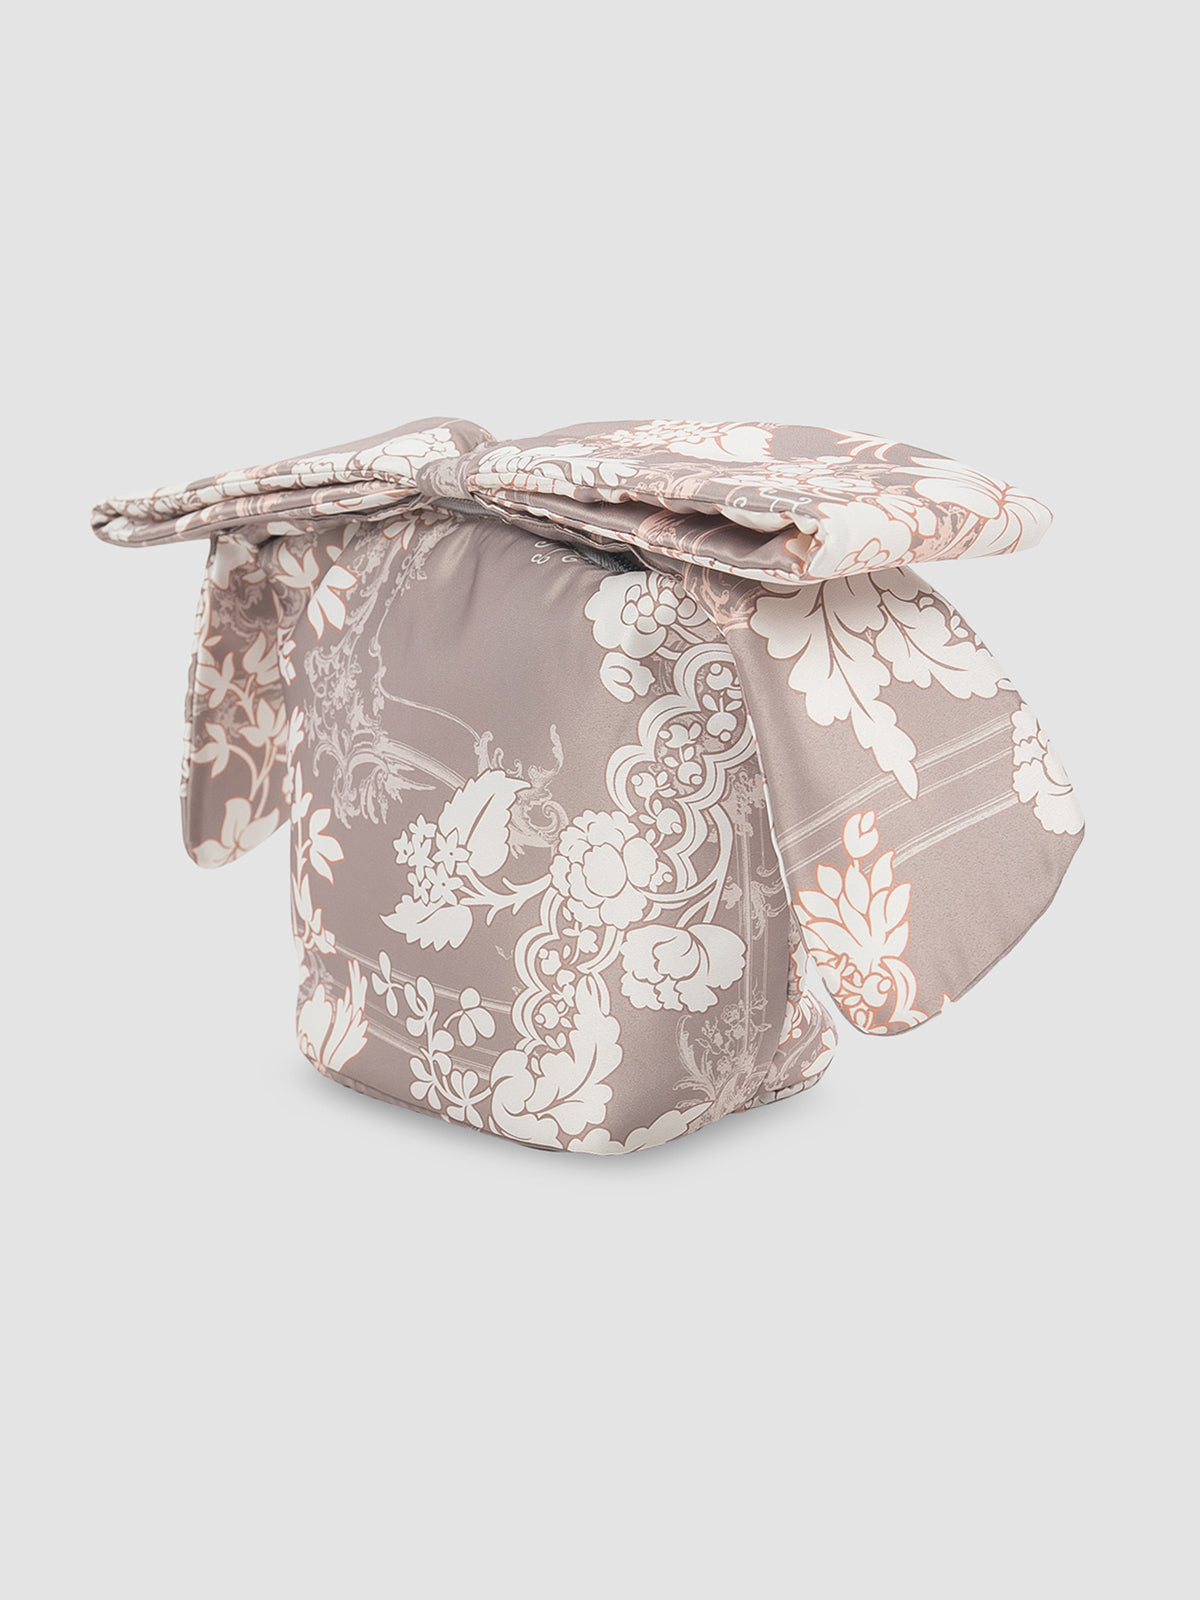 Jewel printed bag with bow handle